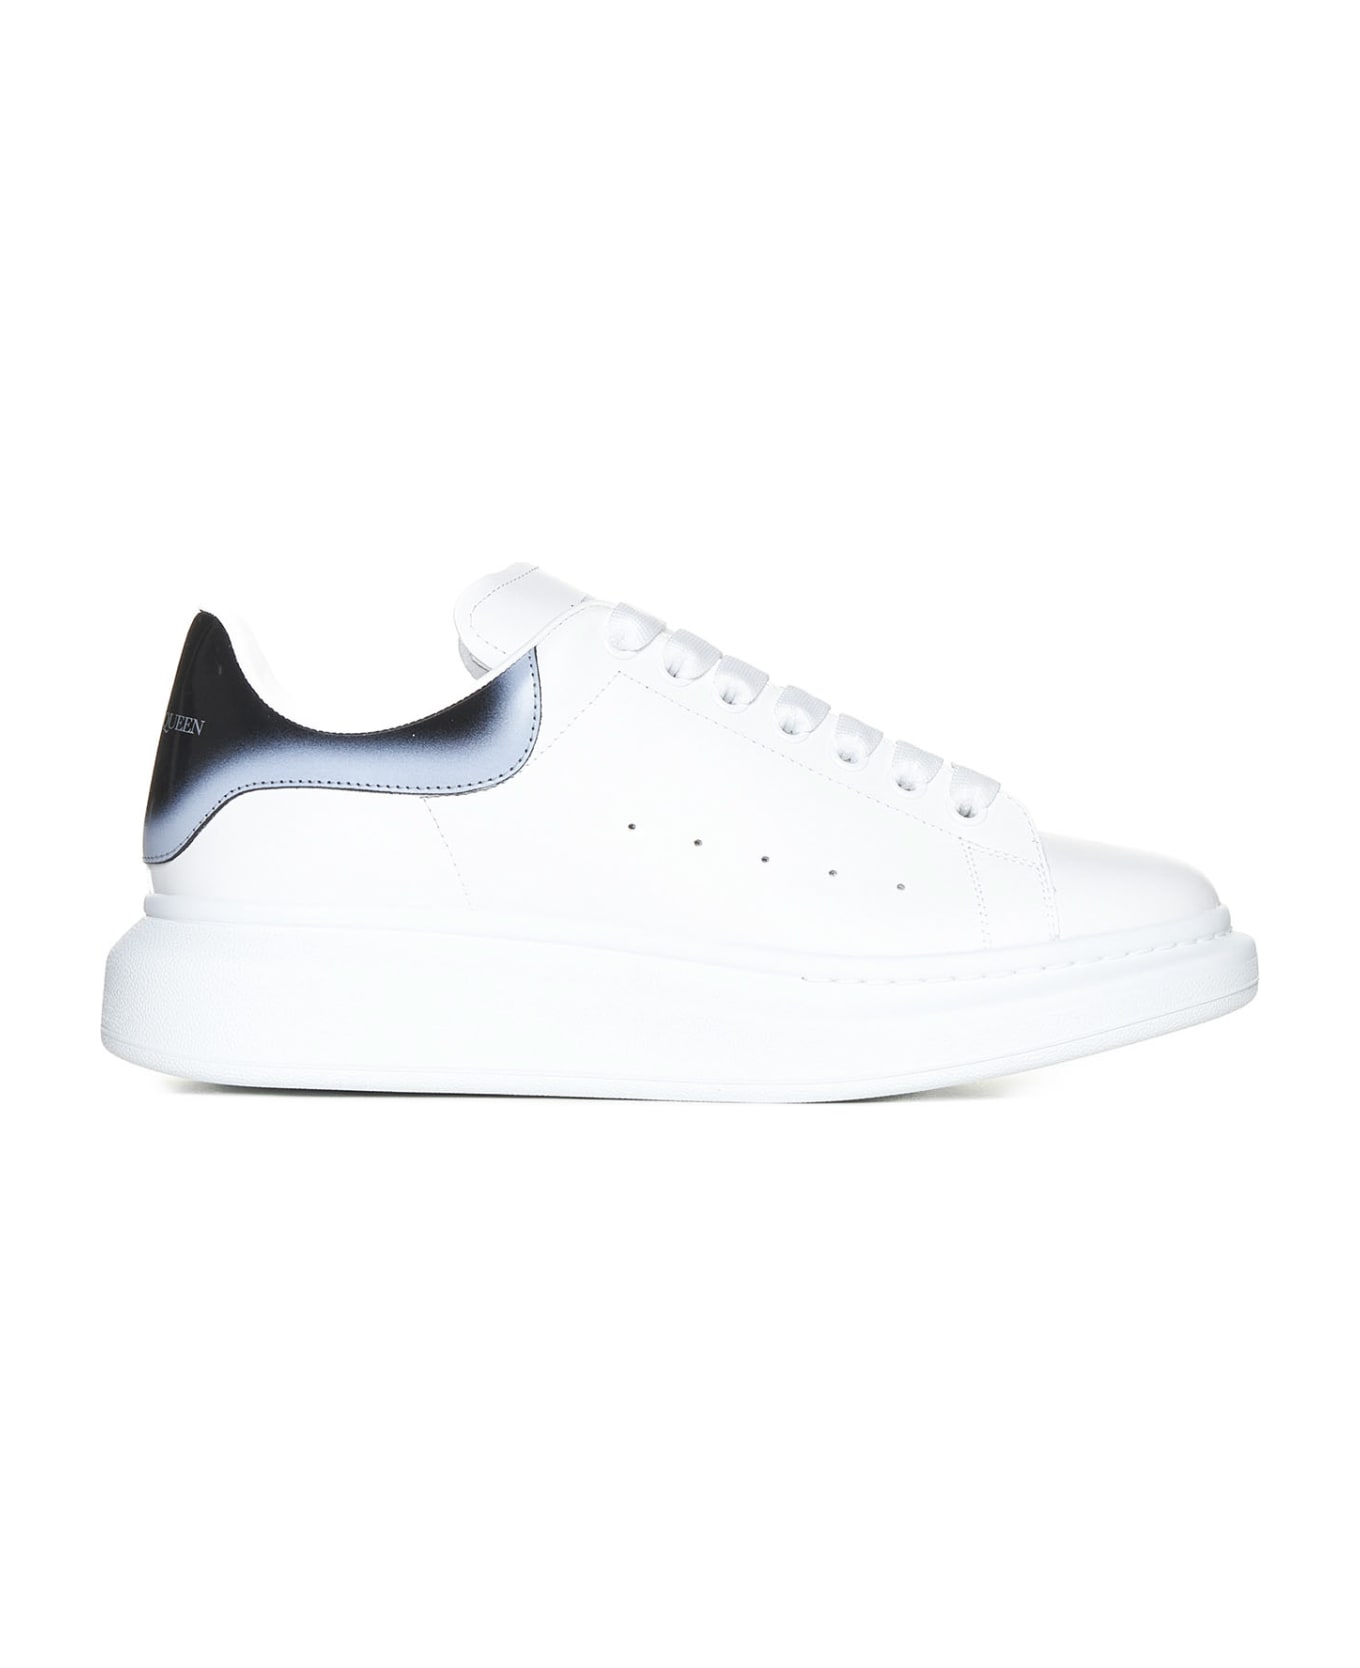 Alexander McQueen Calfskin Sneakers - White Black Silver